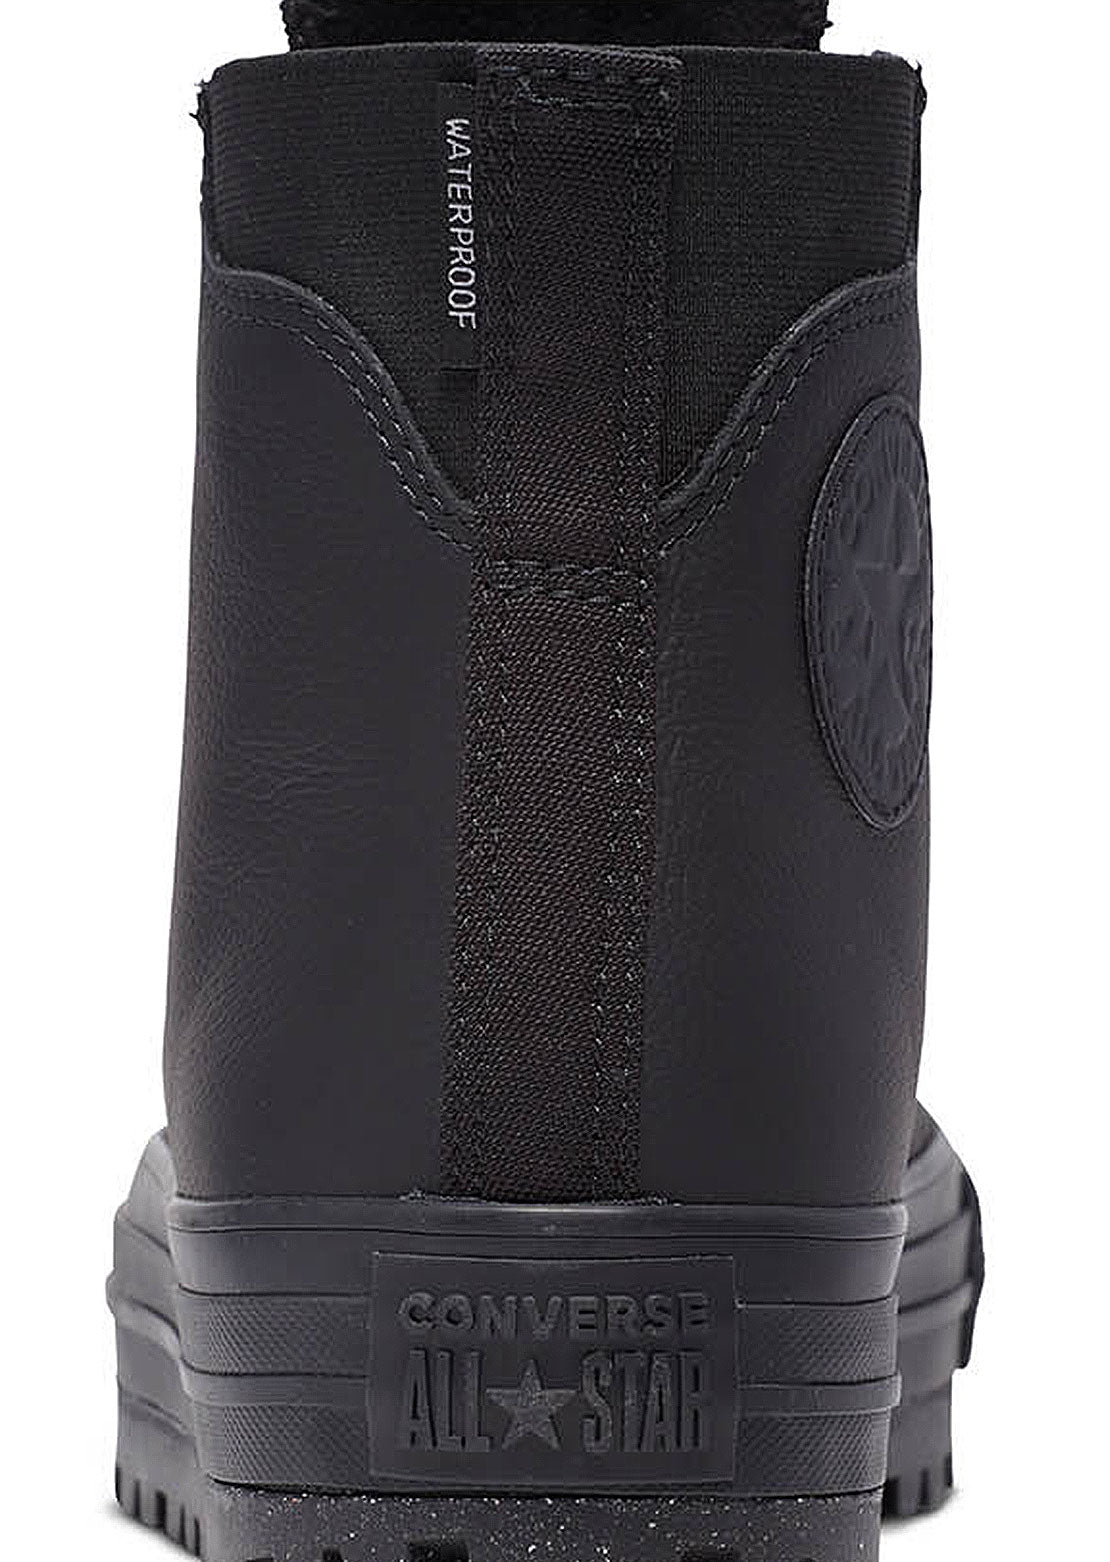 Converse Unisex Chuck Taylor All Star City Trek Waterproof Boots Black/Black/Black